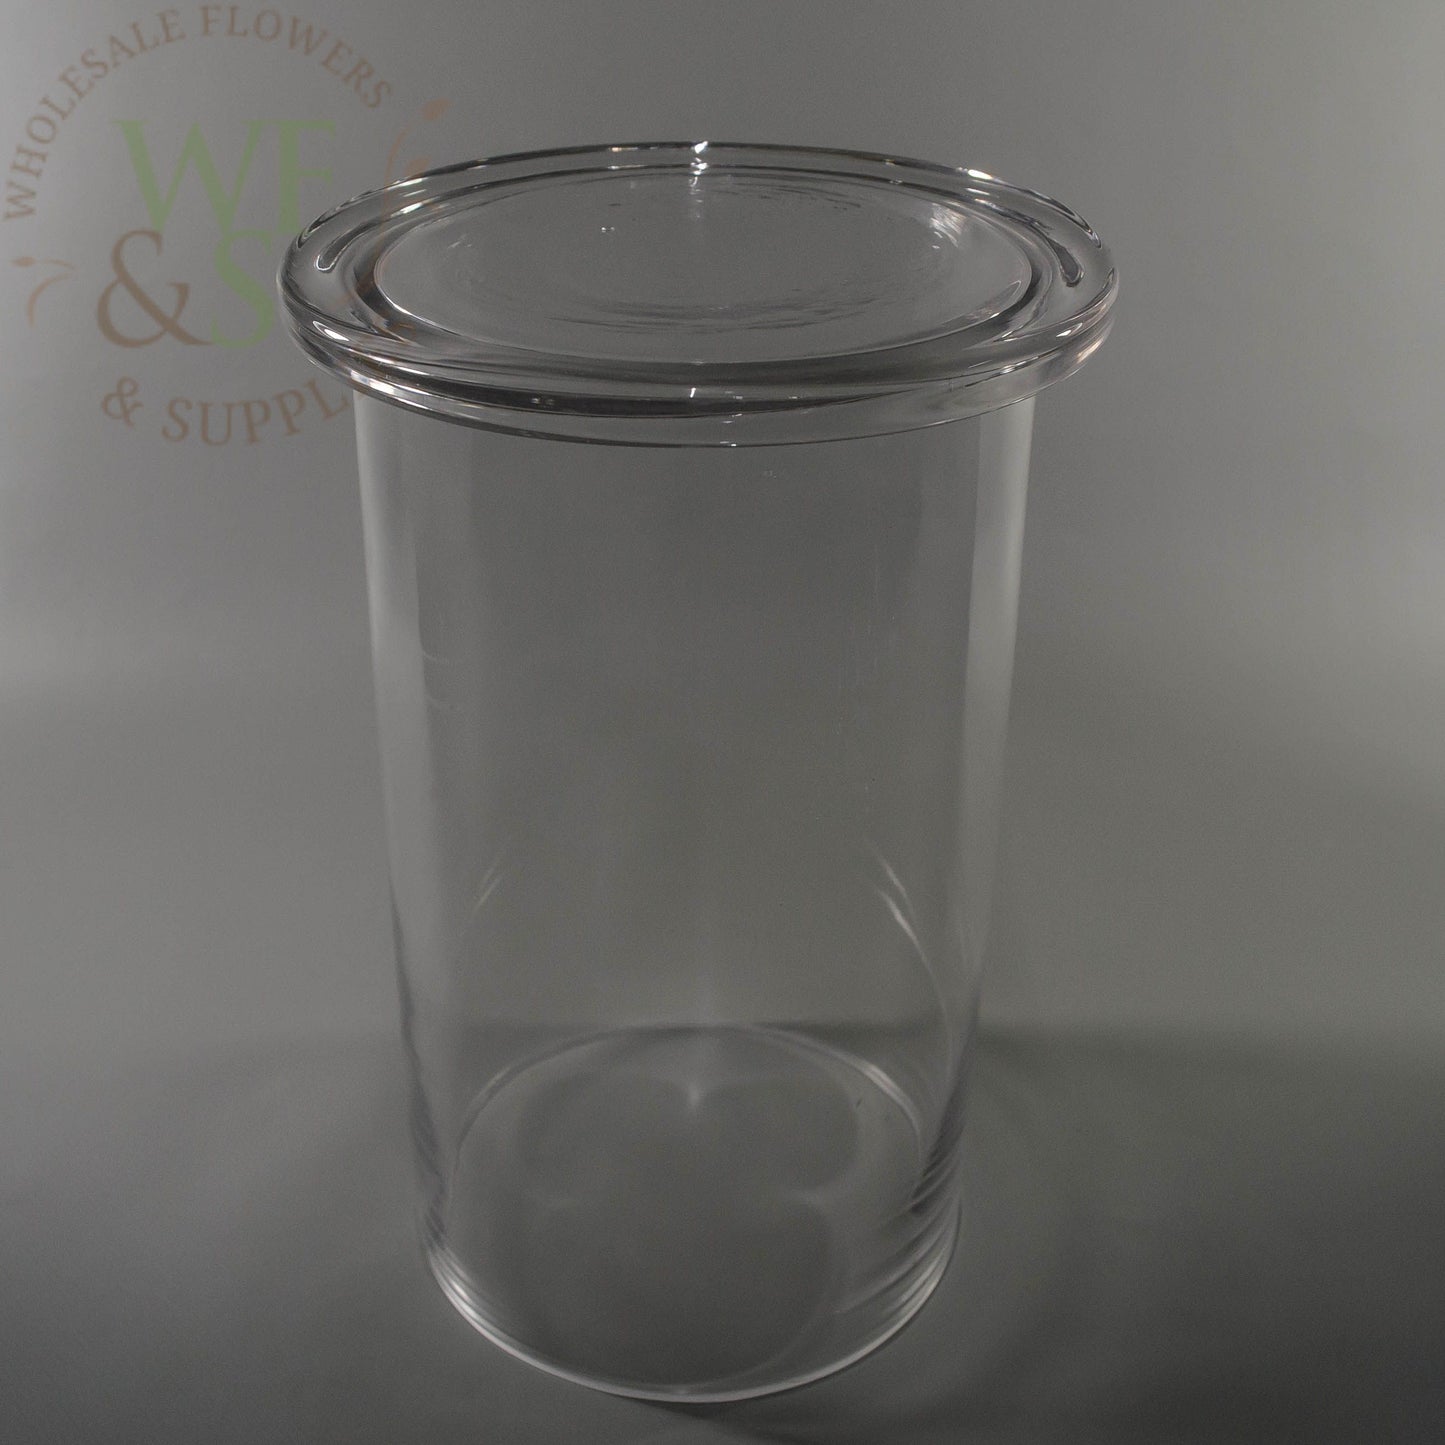 Glass Cylinder Candy Jar Vases with Lids Set of 3